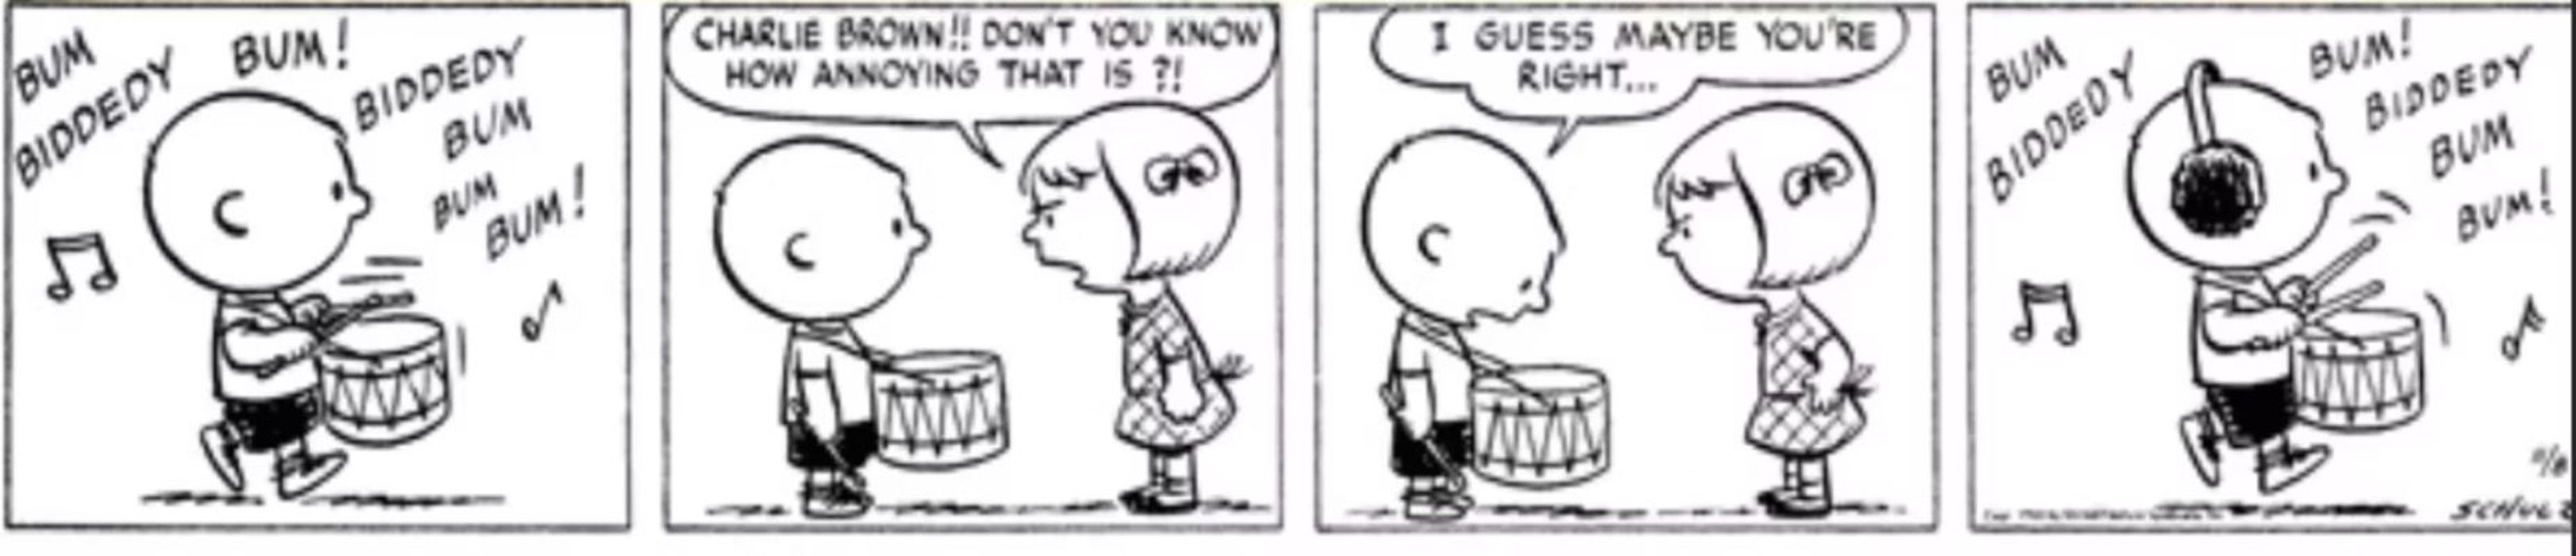 15 Funniest Peanuts Comics Starring Charlie Brown